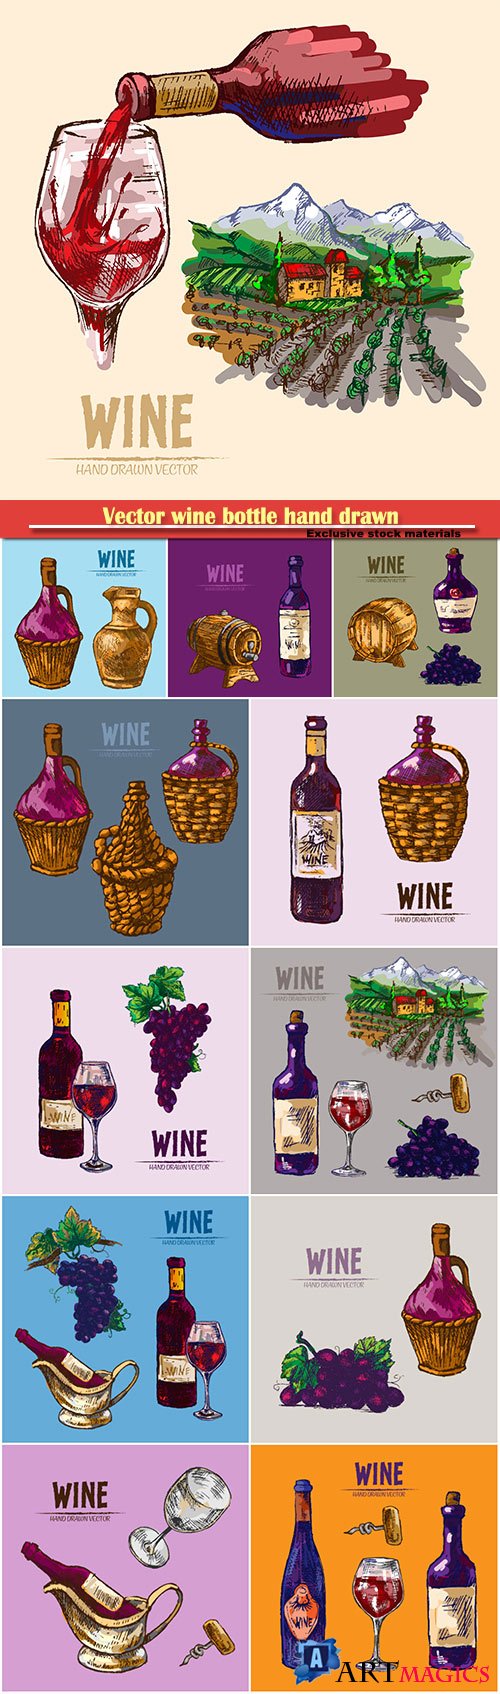 Vector wine bottle hand drawn retro illustration